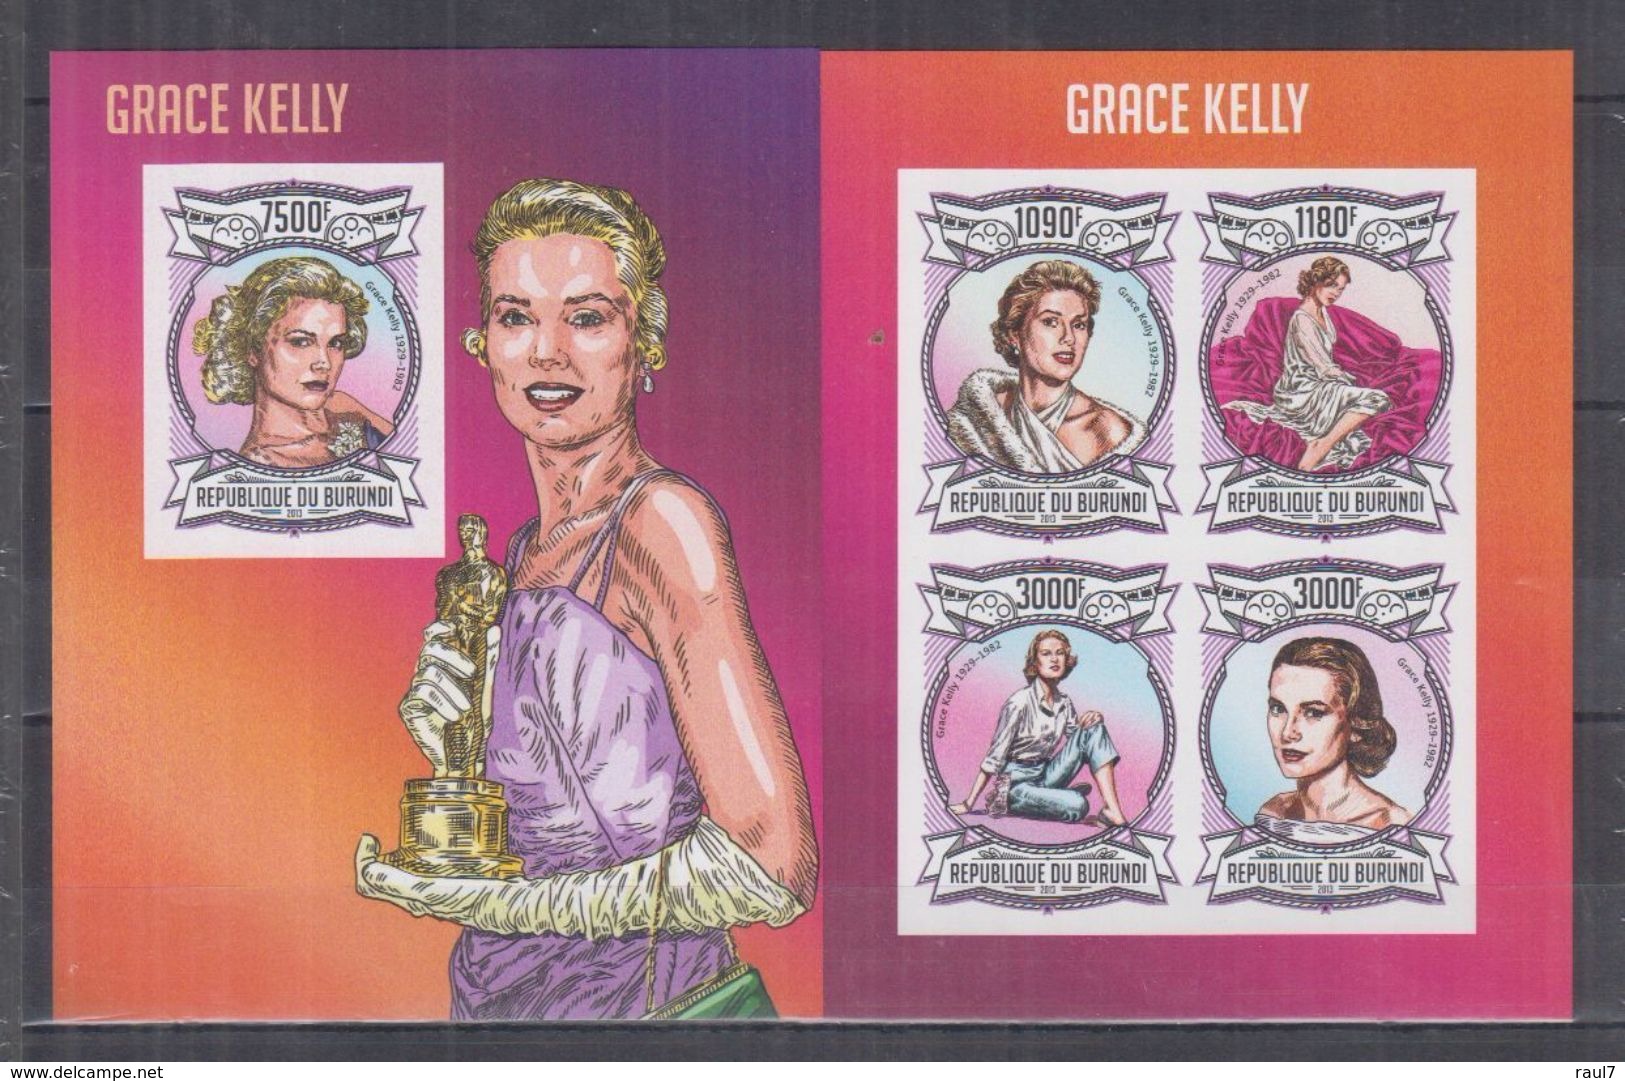 BURUNDI 2013 - Cinéma, Grace Kelly - Feuillet 4 Val + BF ND Neufs // Mnh Imp // CV 71.00 Euros - Unused Stamps